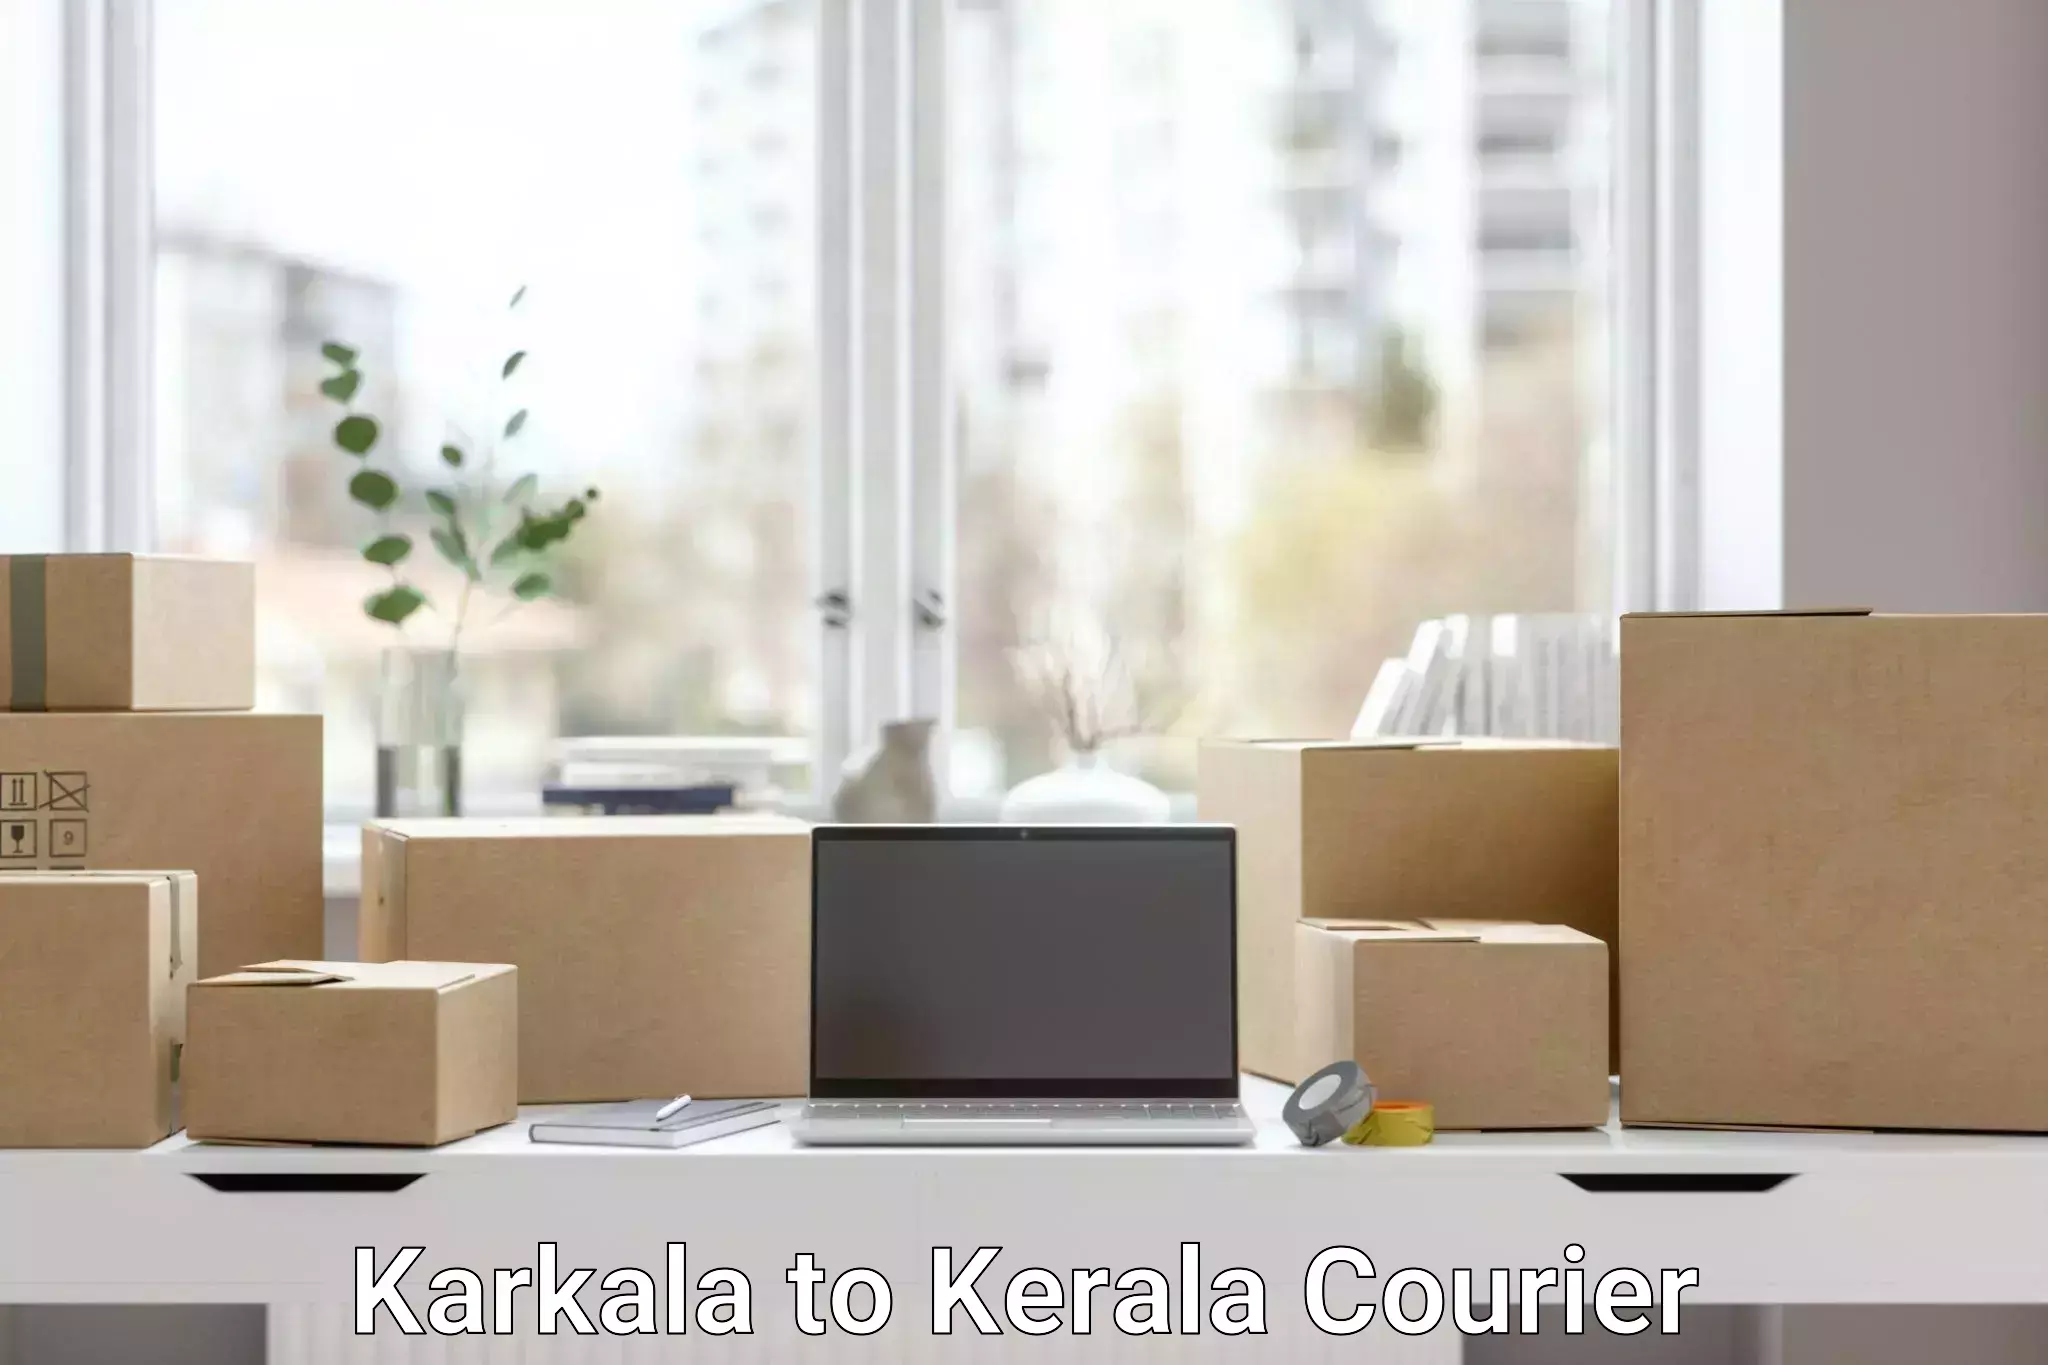 Global logistics network Karkala to Kerala